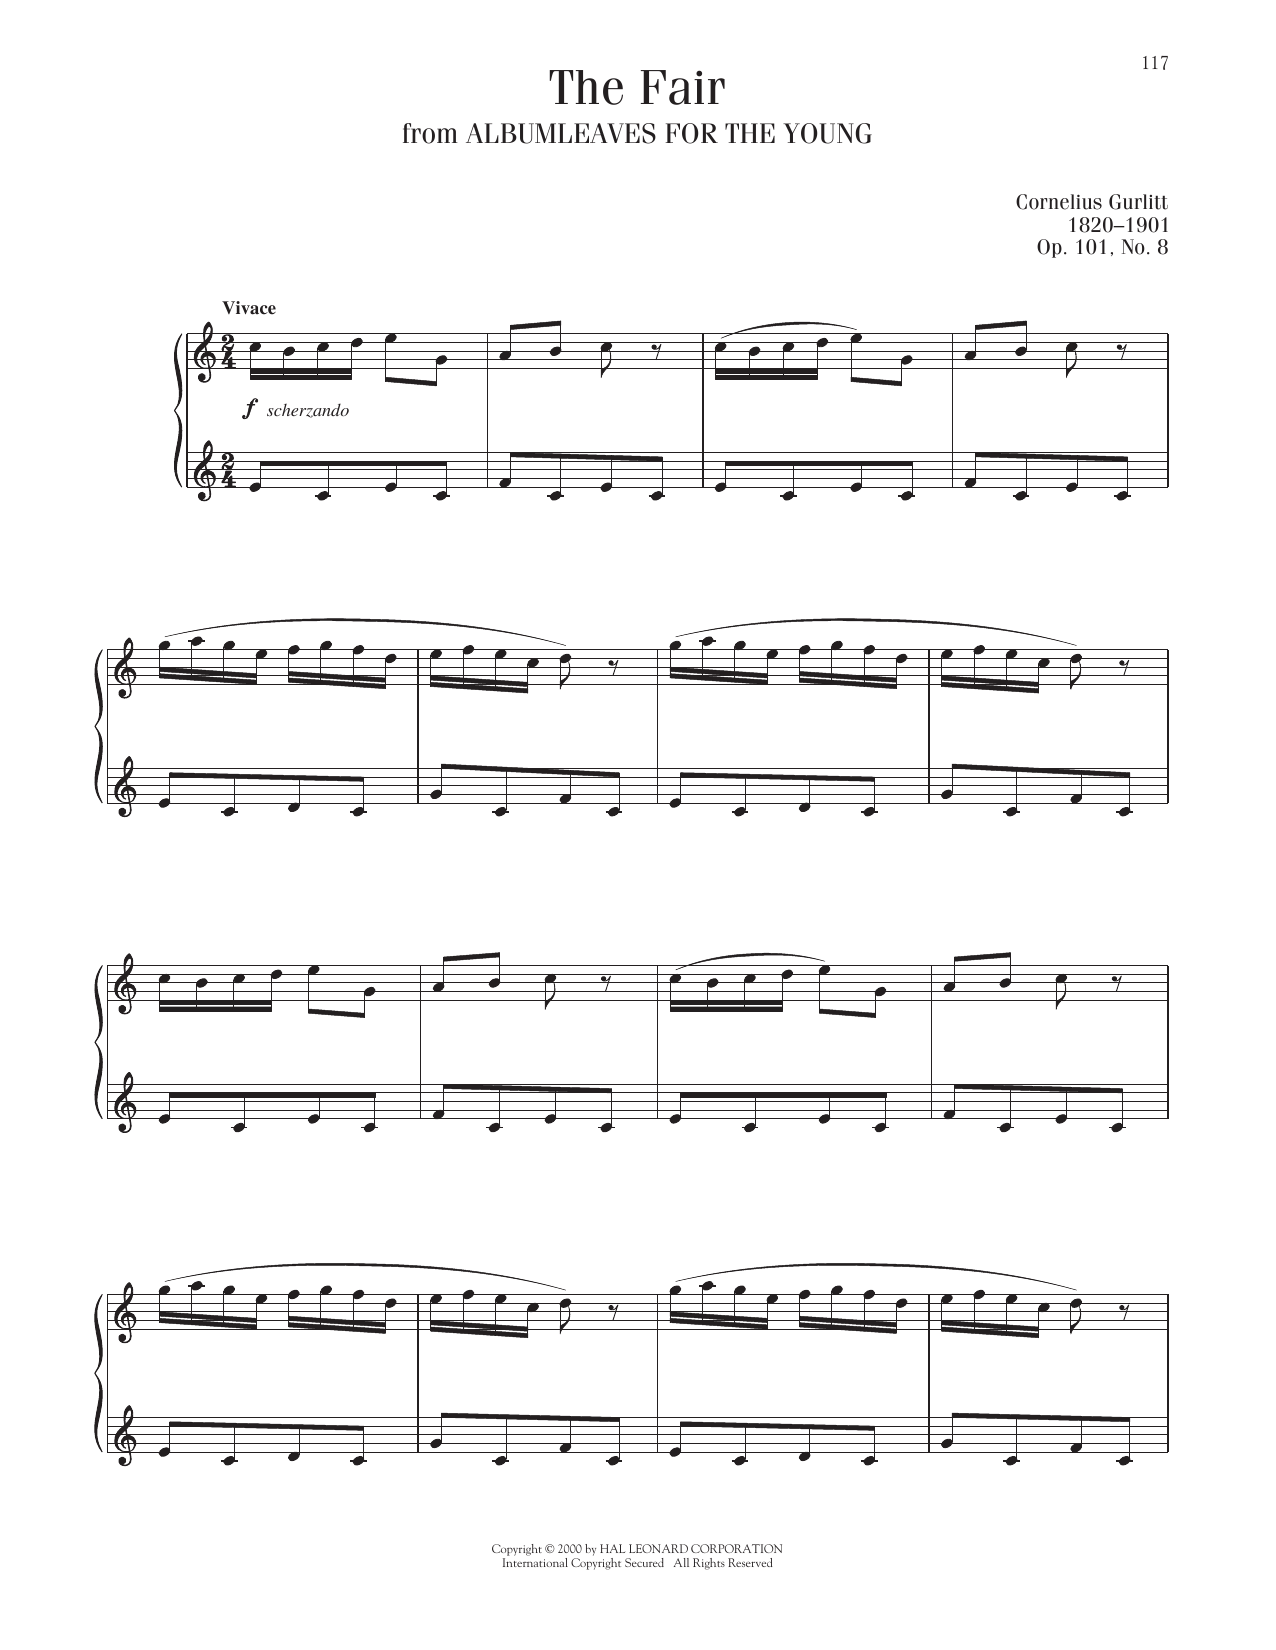 Cornelius Gurlitt The Fair, Op. 101, No. 8 sheet music notes printable PDF score